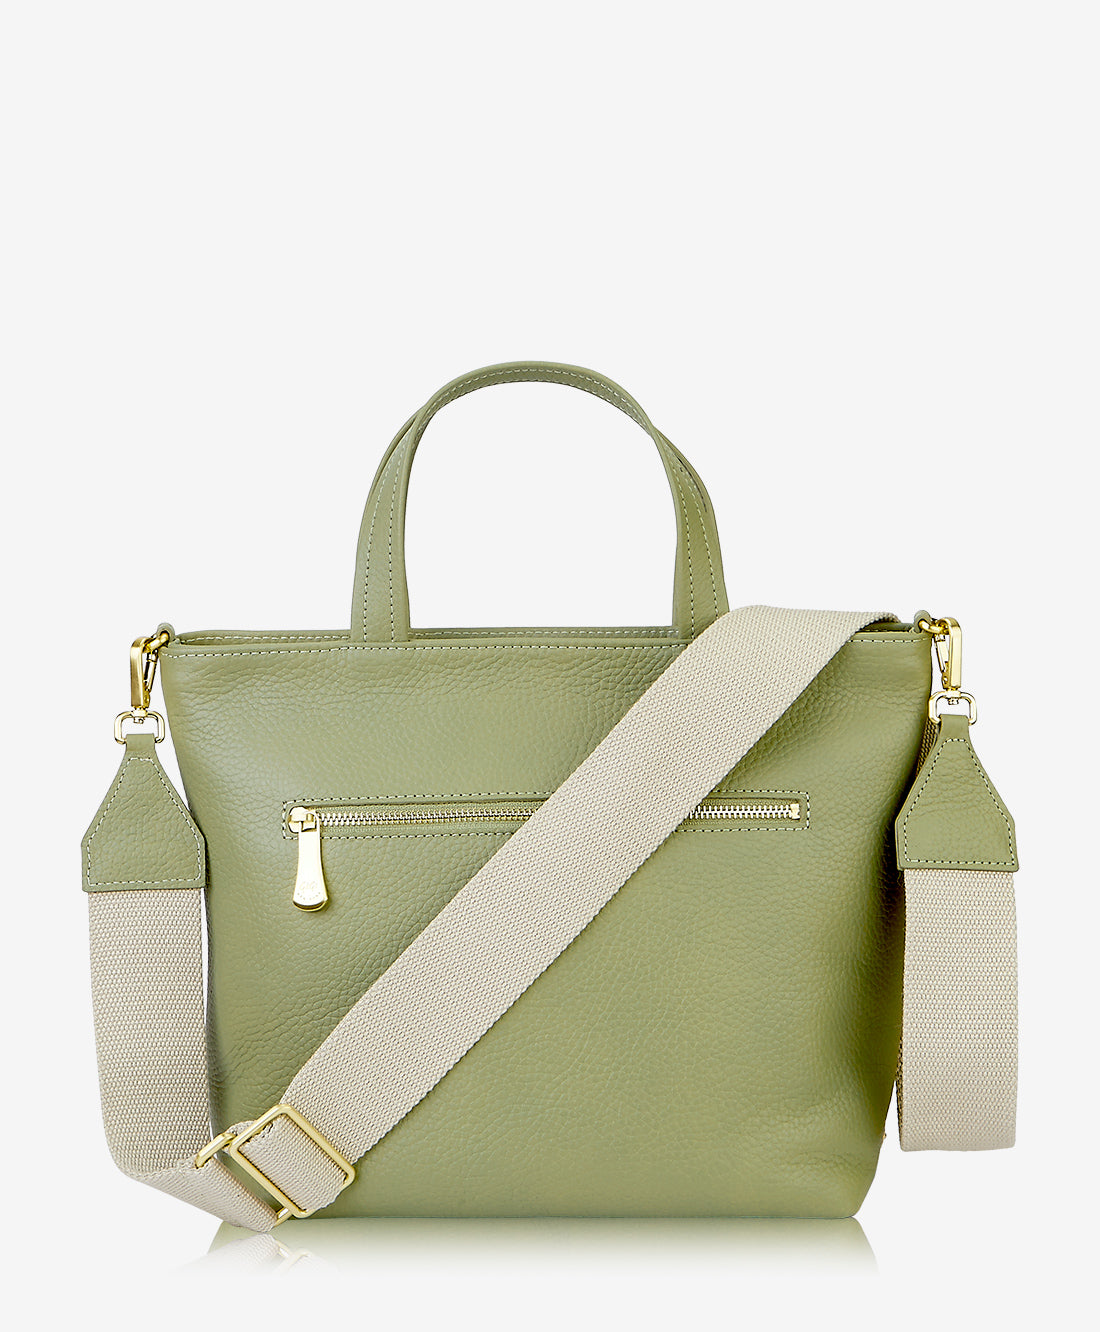 BIMBA Y LOLA Bags & Handbags for Women for sale